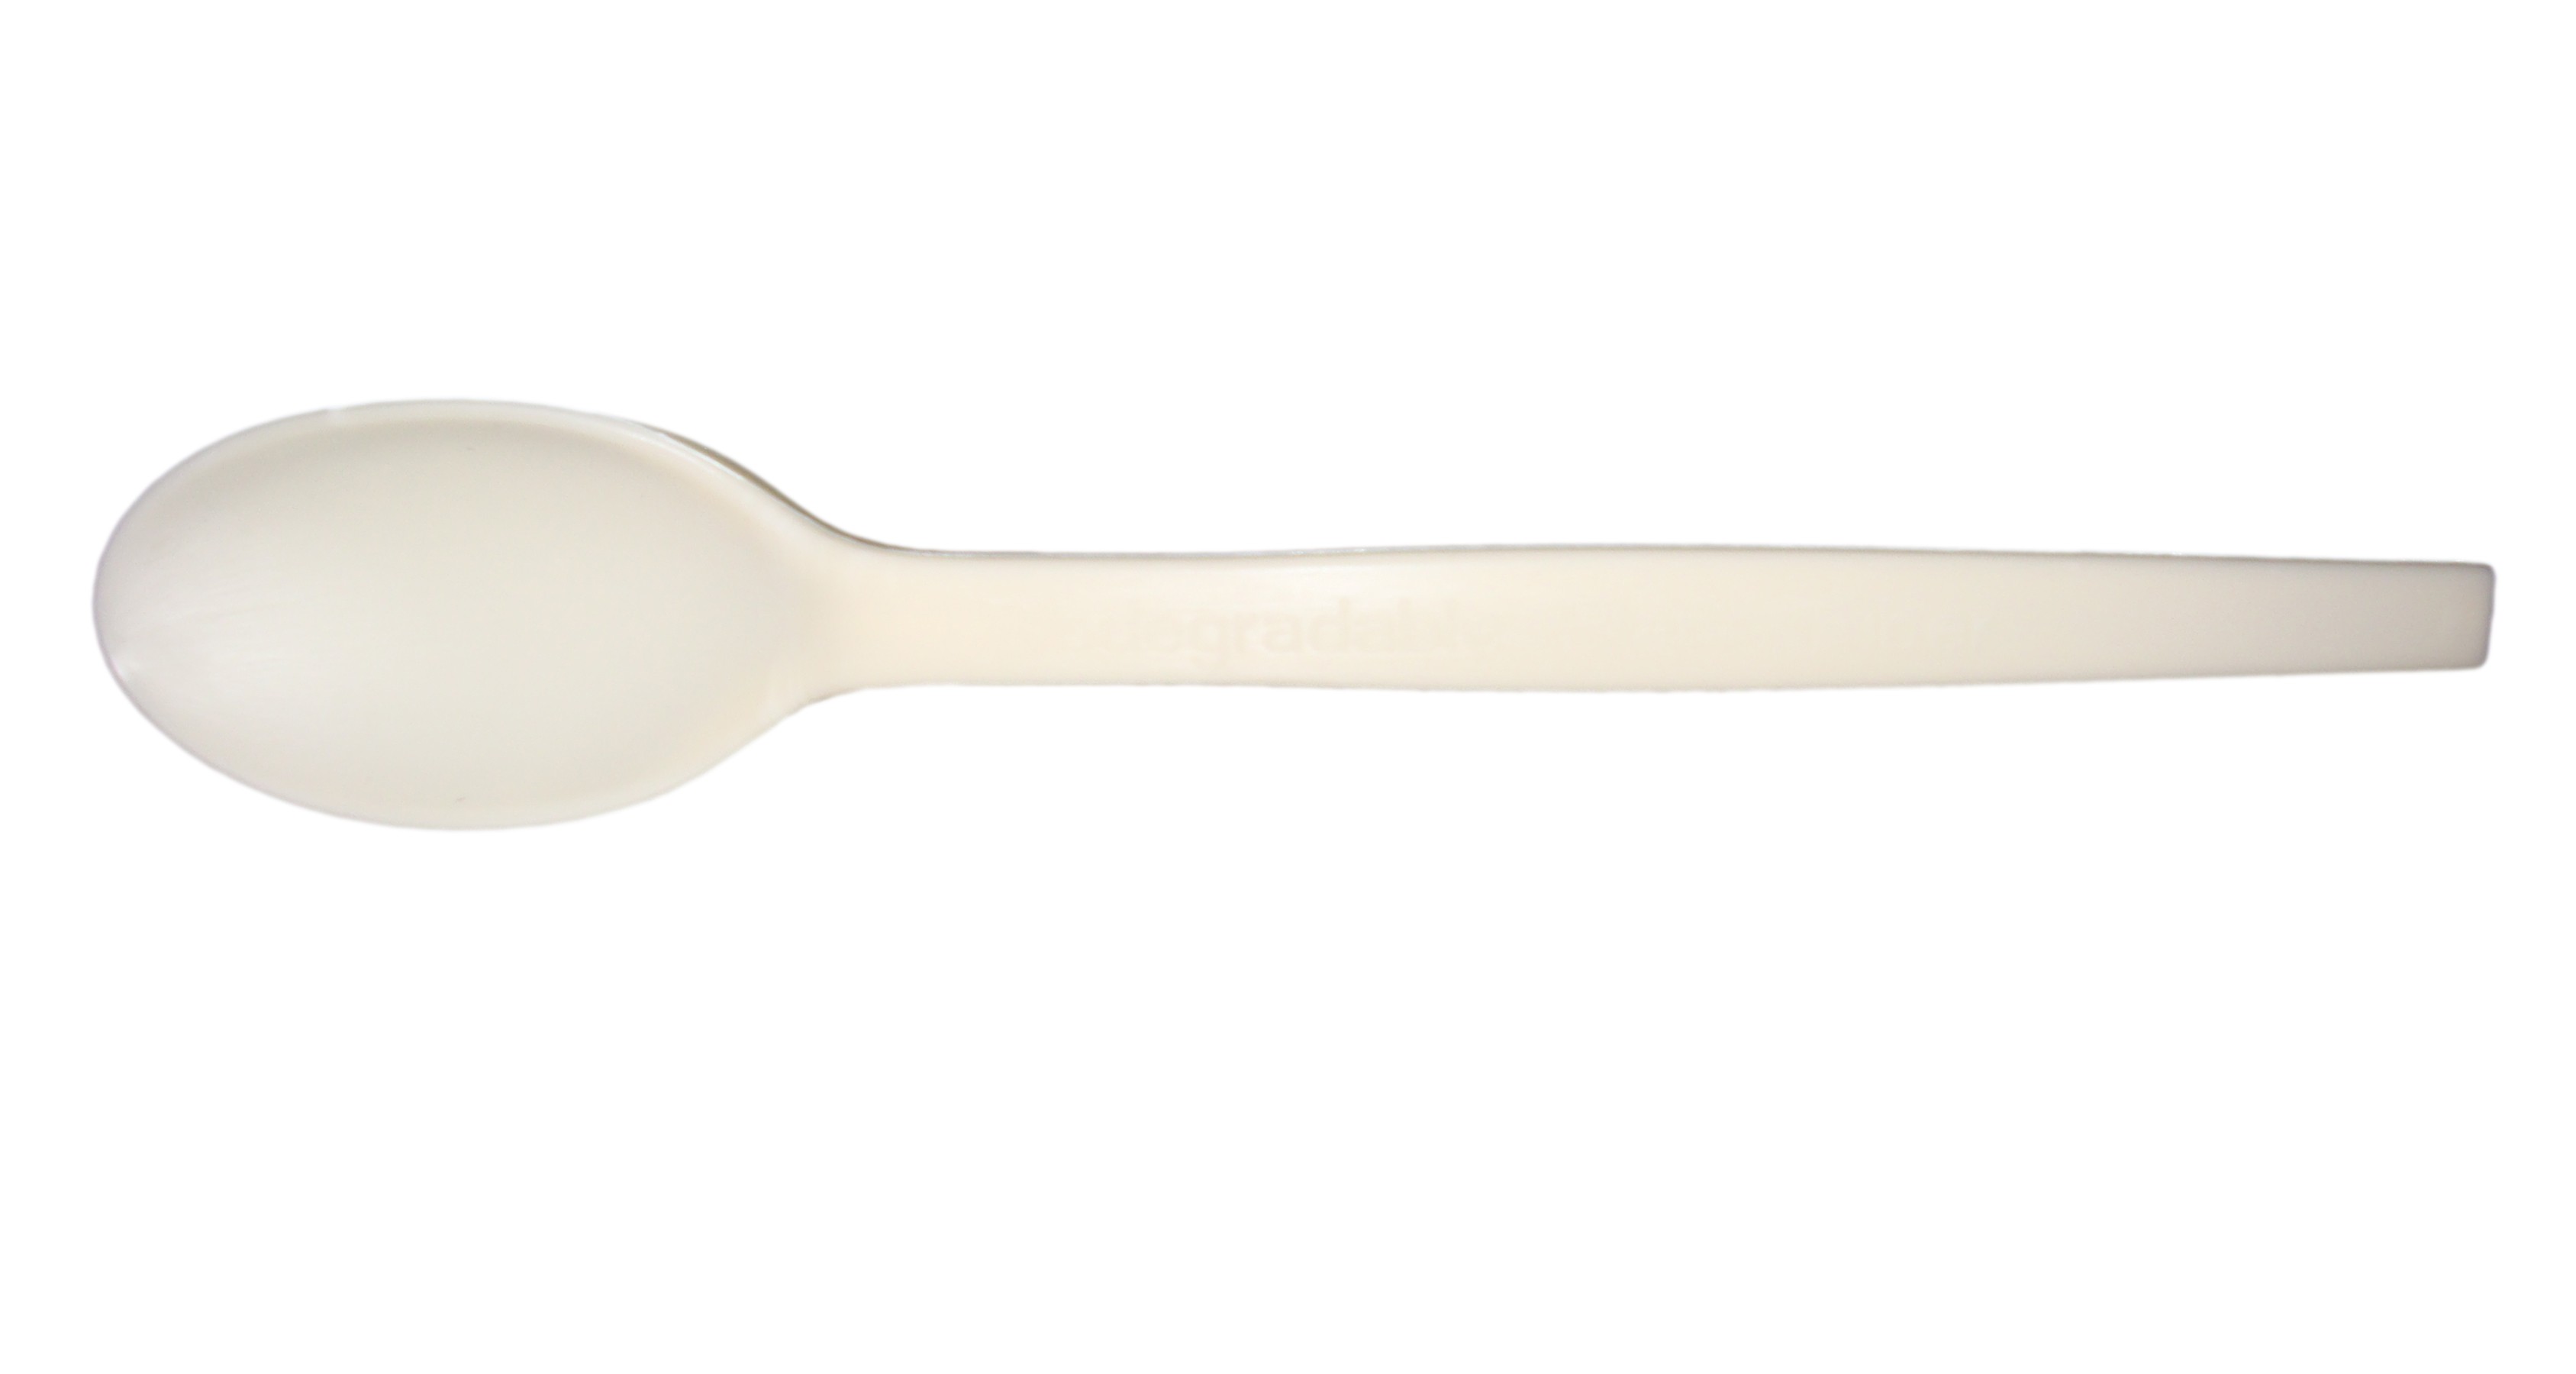 Spoon 7" Plant Based Material White 20/50/CS